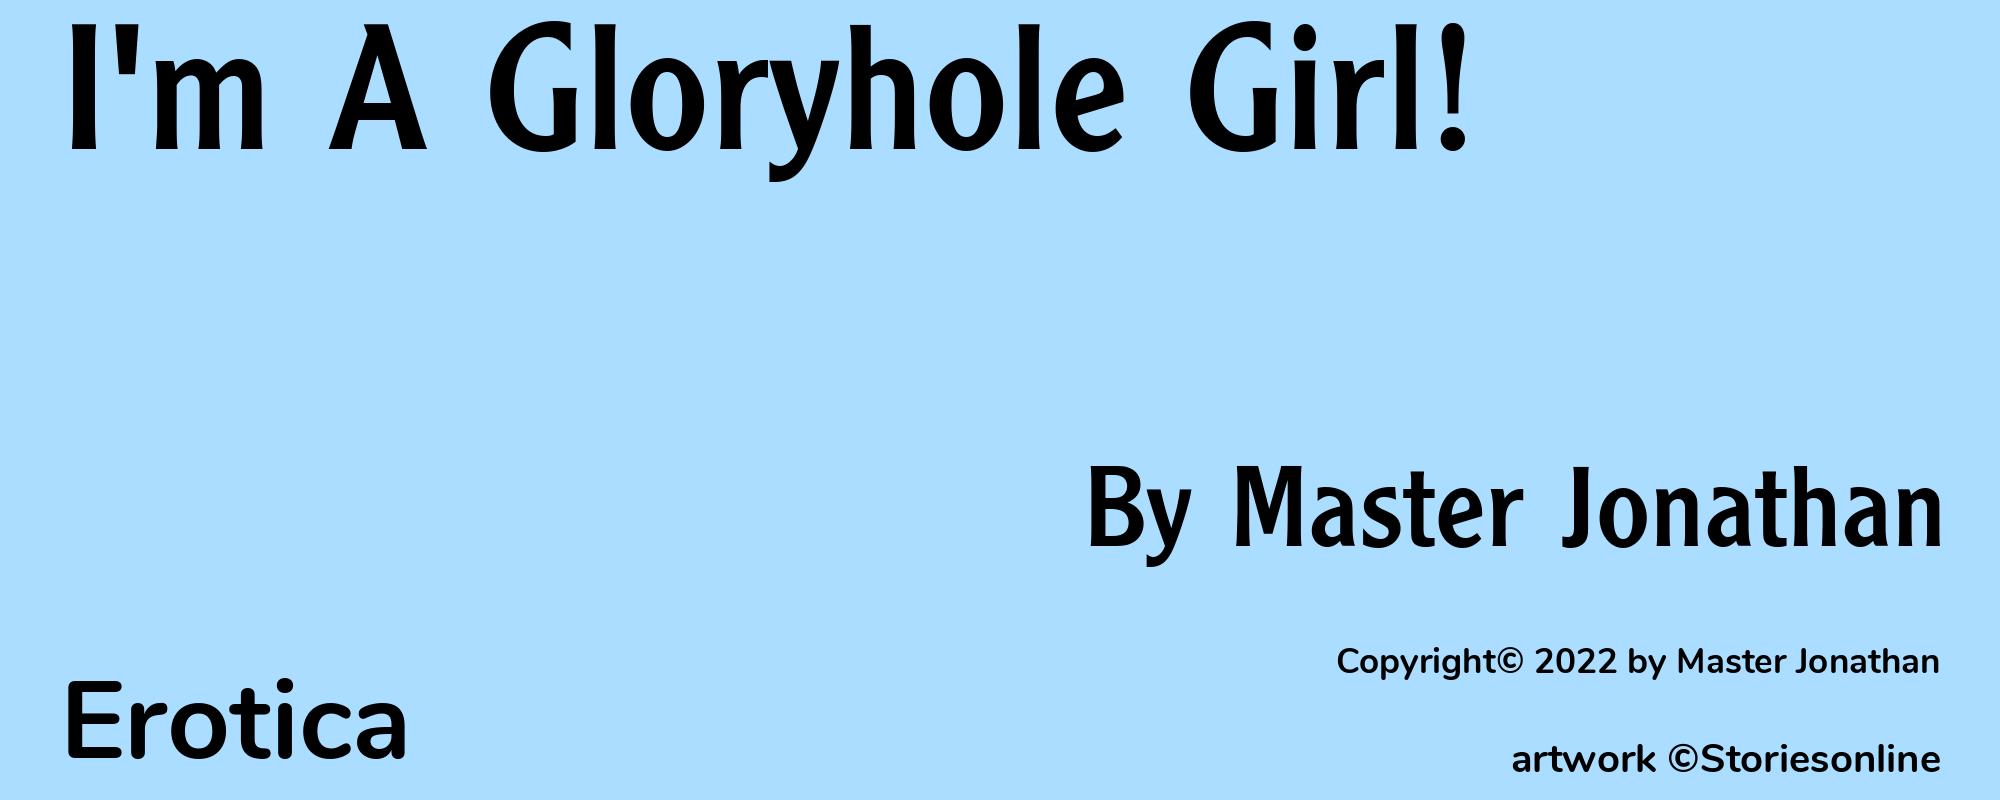 I'm A Gloryhole Girl! - Cover